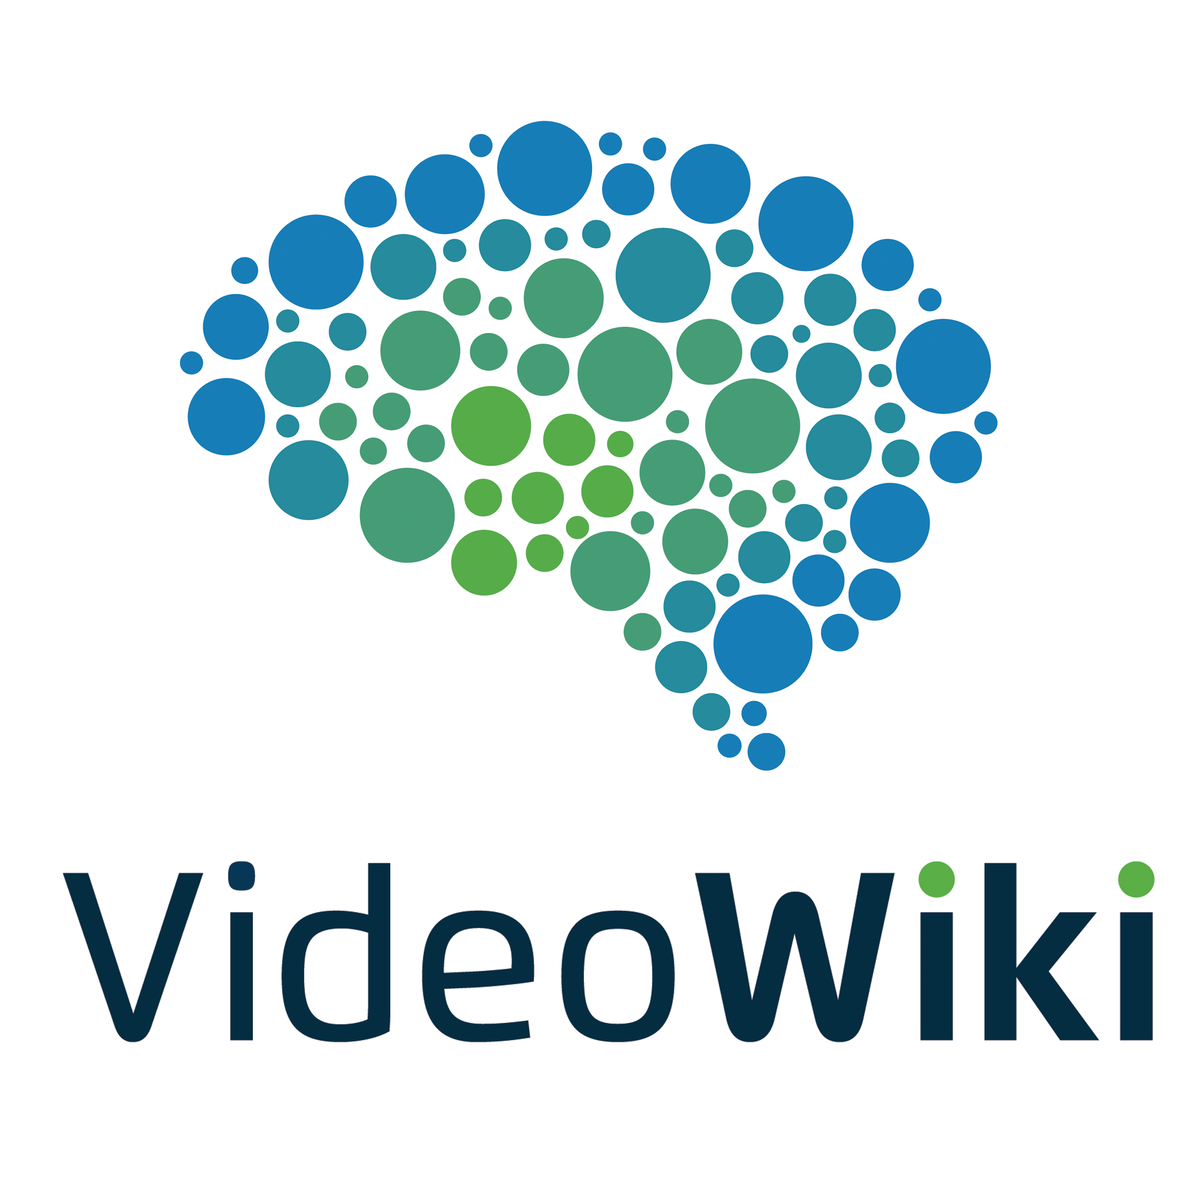 Video - Wikipedia